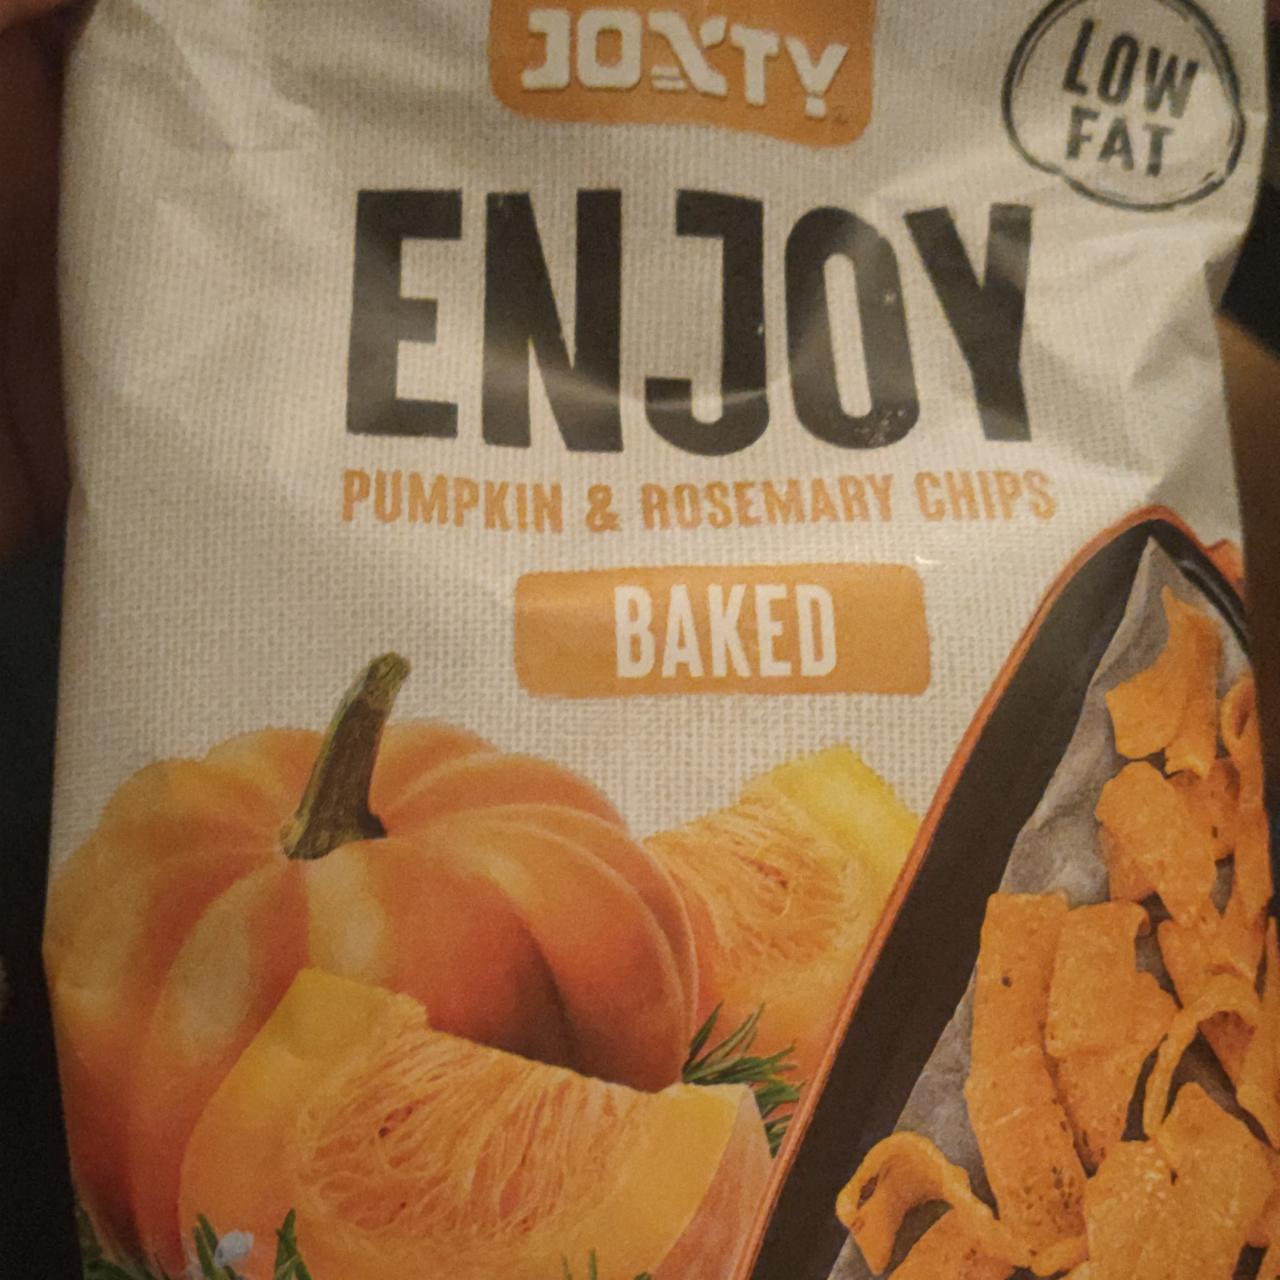 Fotografie - Enjoy pumpkin & rosemary chips baked Joxty